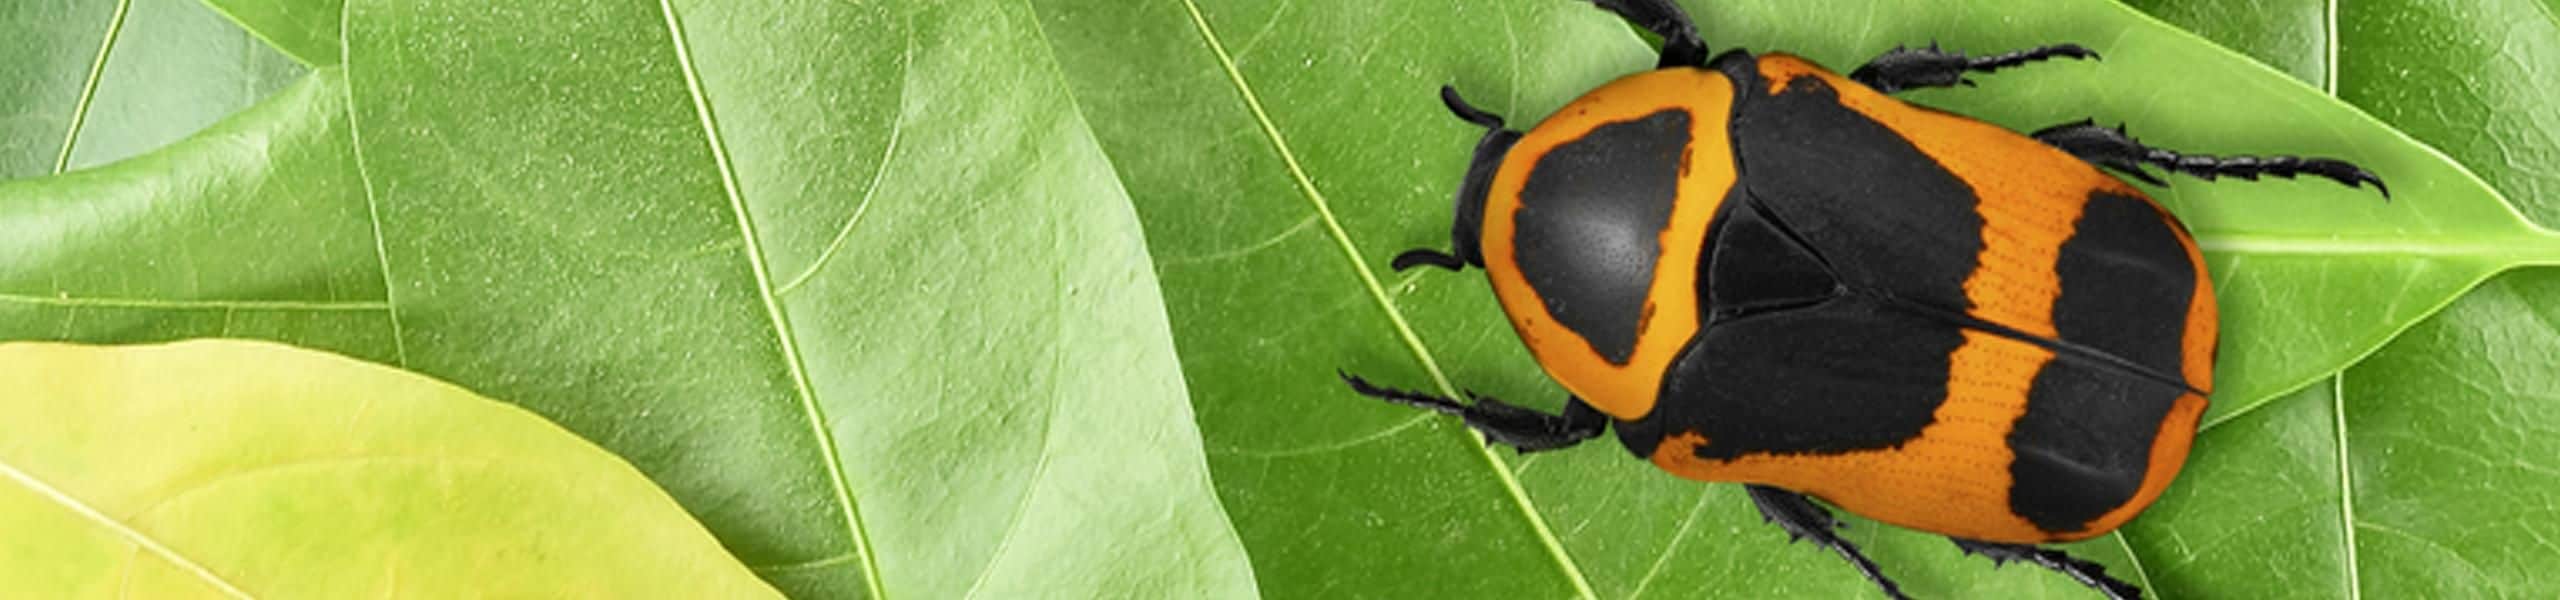 Sun Beetle - Pachnoda marginata peregrina | Paultons Park